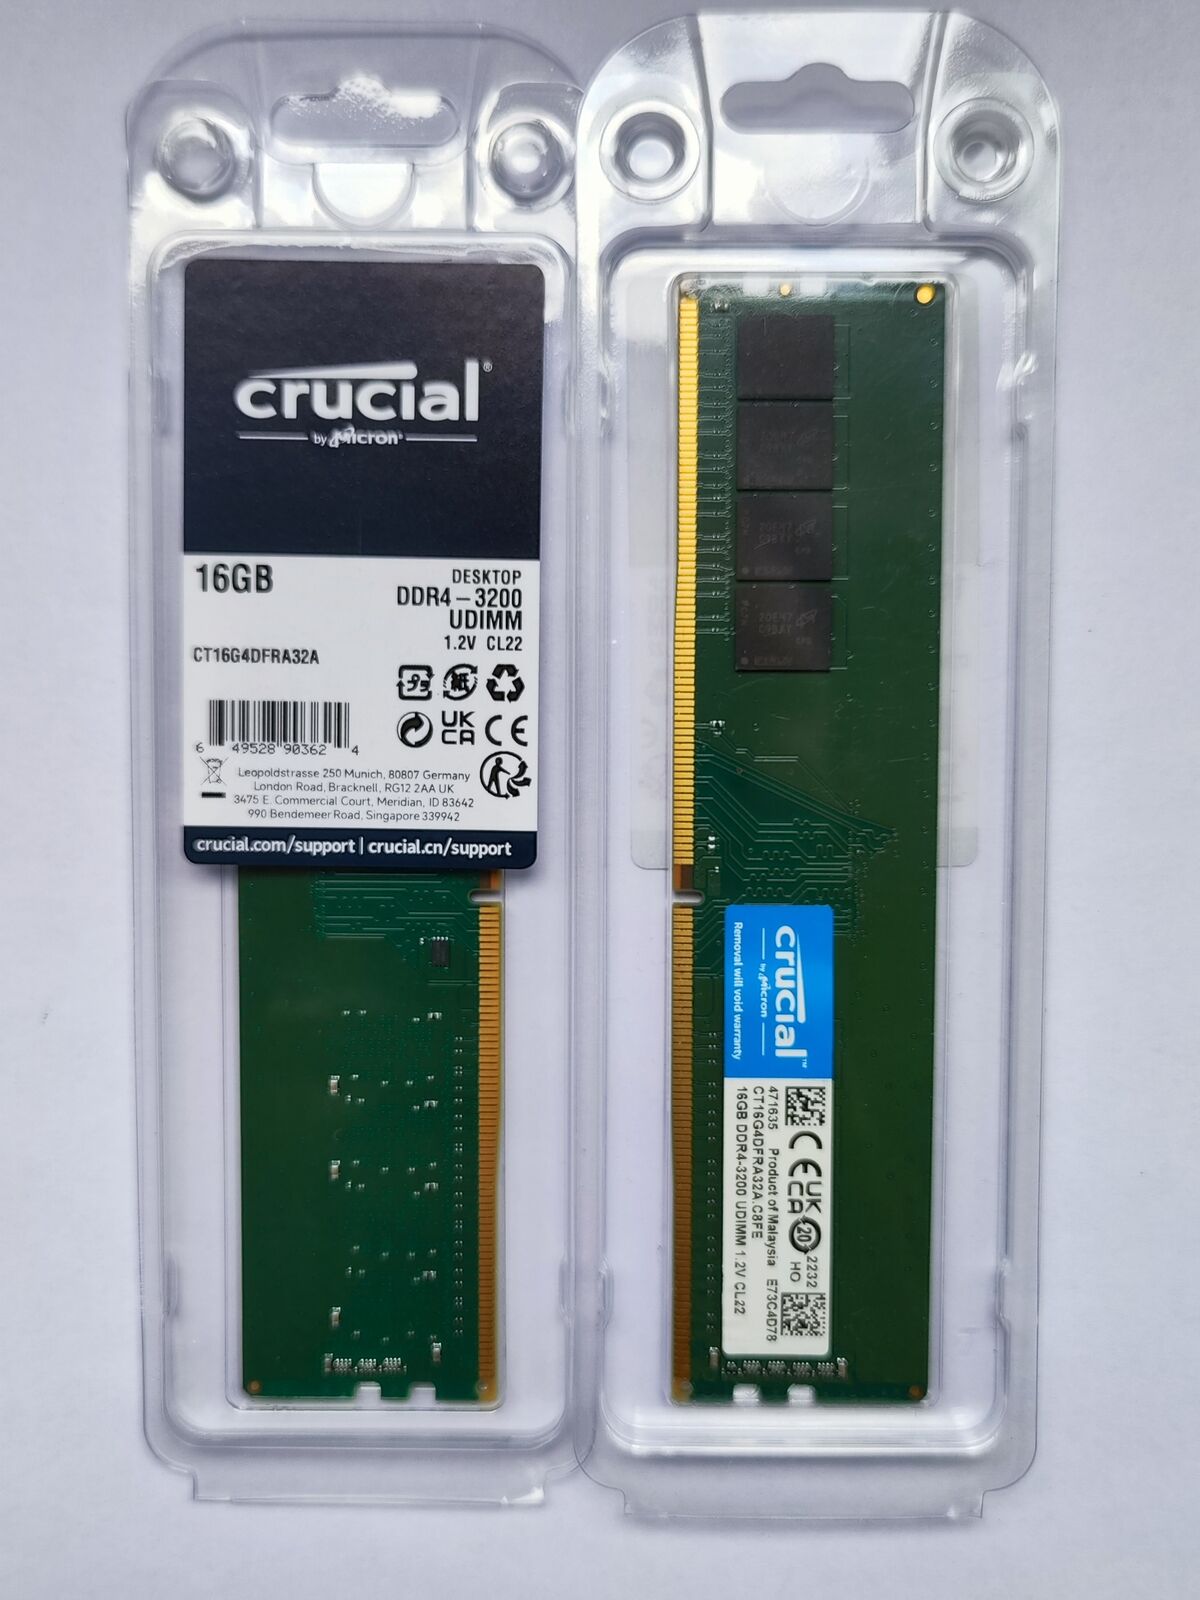 Crucial genuine 16GB 3200MHz DDR4 UDIMM Desktop Memory PC4-25600 CT16G4DFRA32A